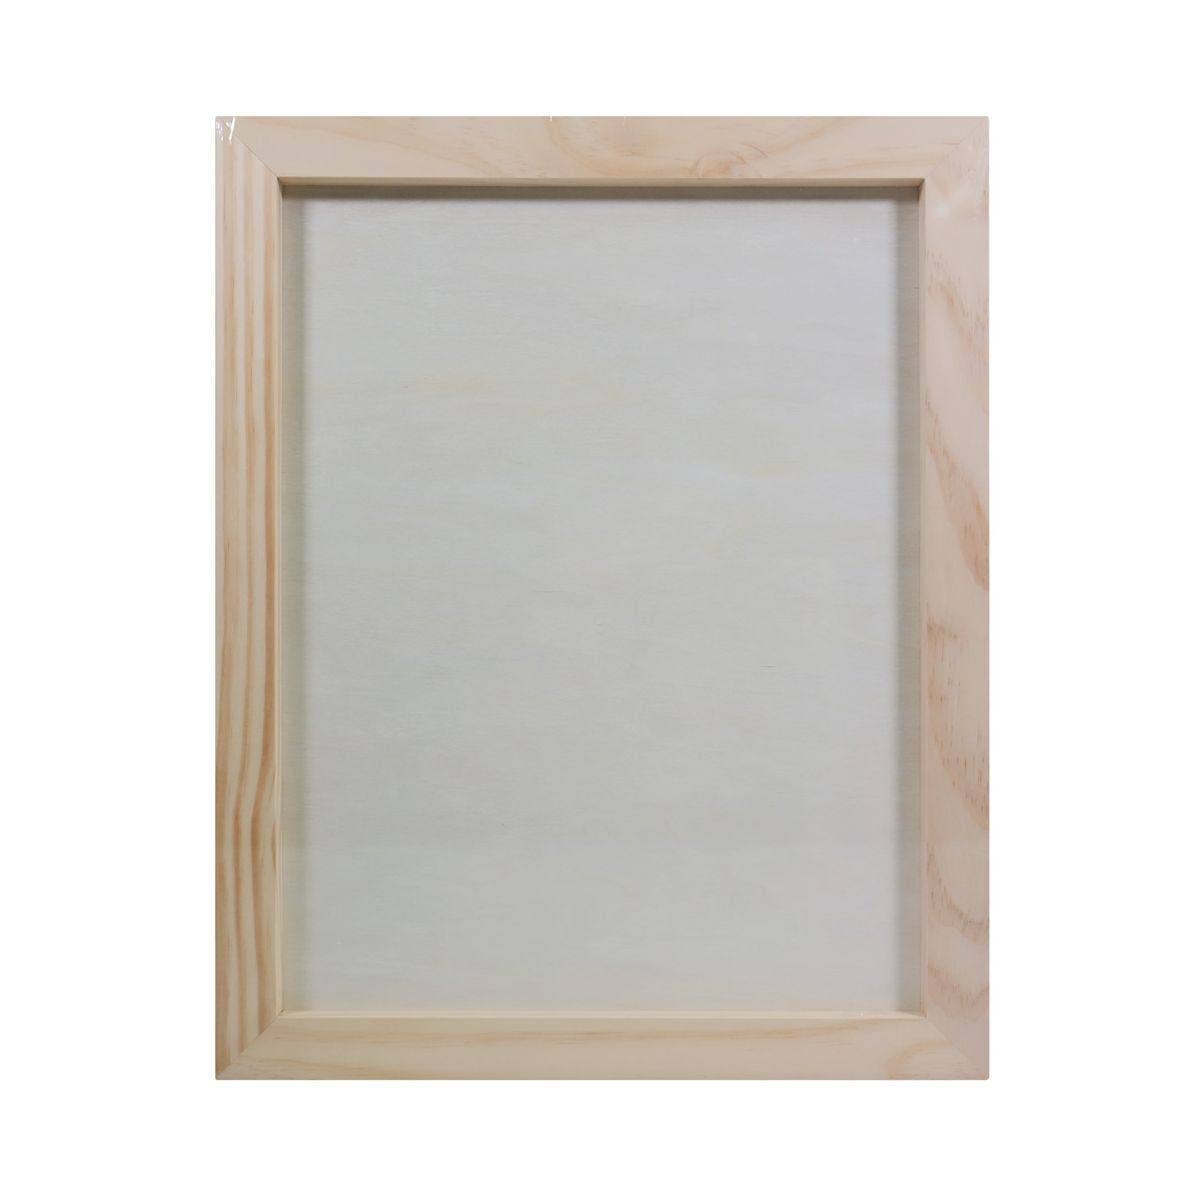 Painting Board Premium 40.6 x 50.8cm (16 x 20in)